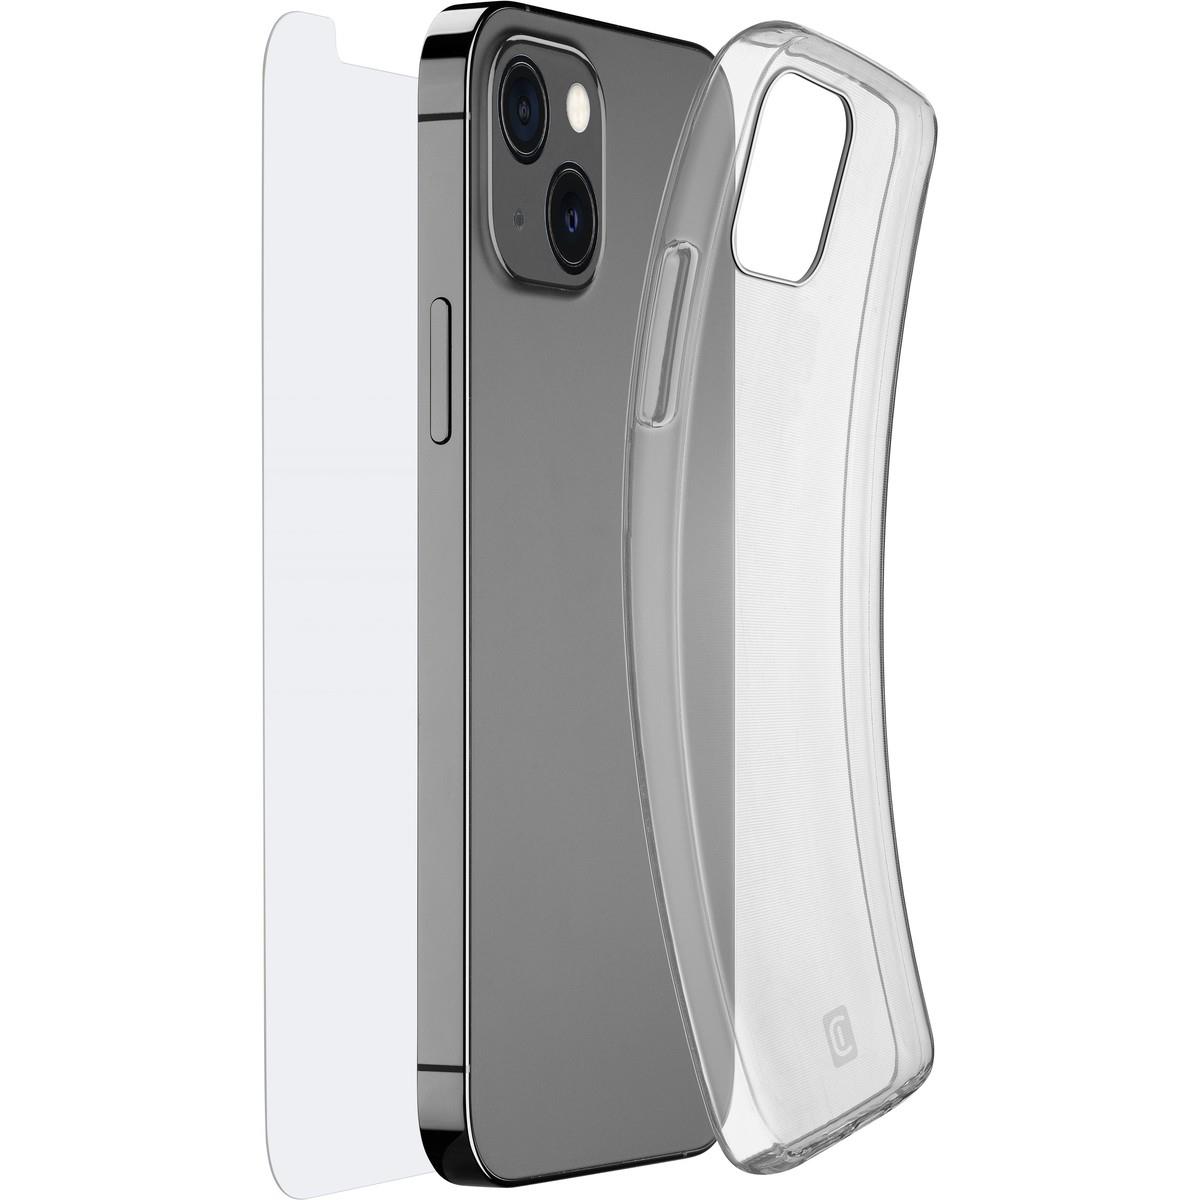 Set PROTECTION KIT aus Backcover und Schutzglas für Apple iPhone 13 mini